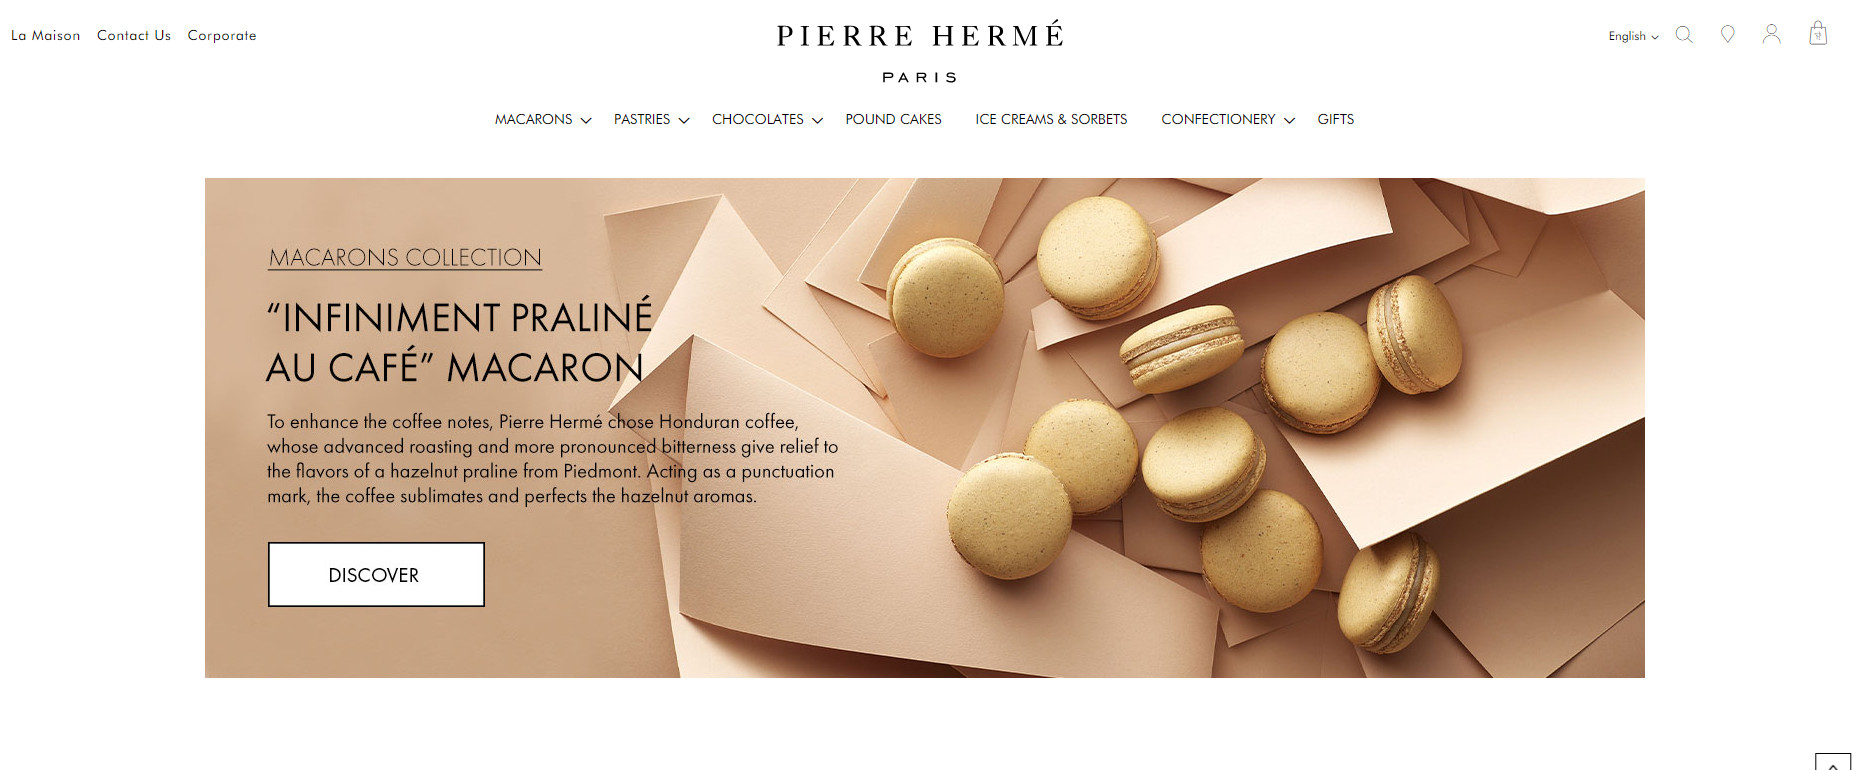 bakery website template example Pierre Hermé Paris